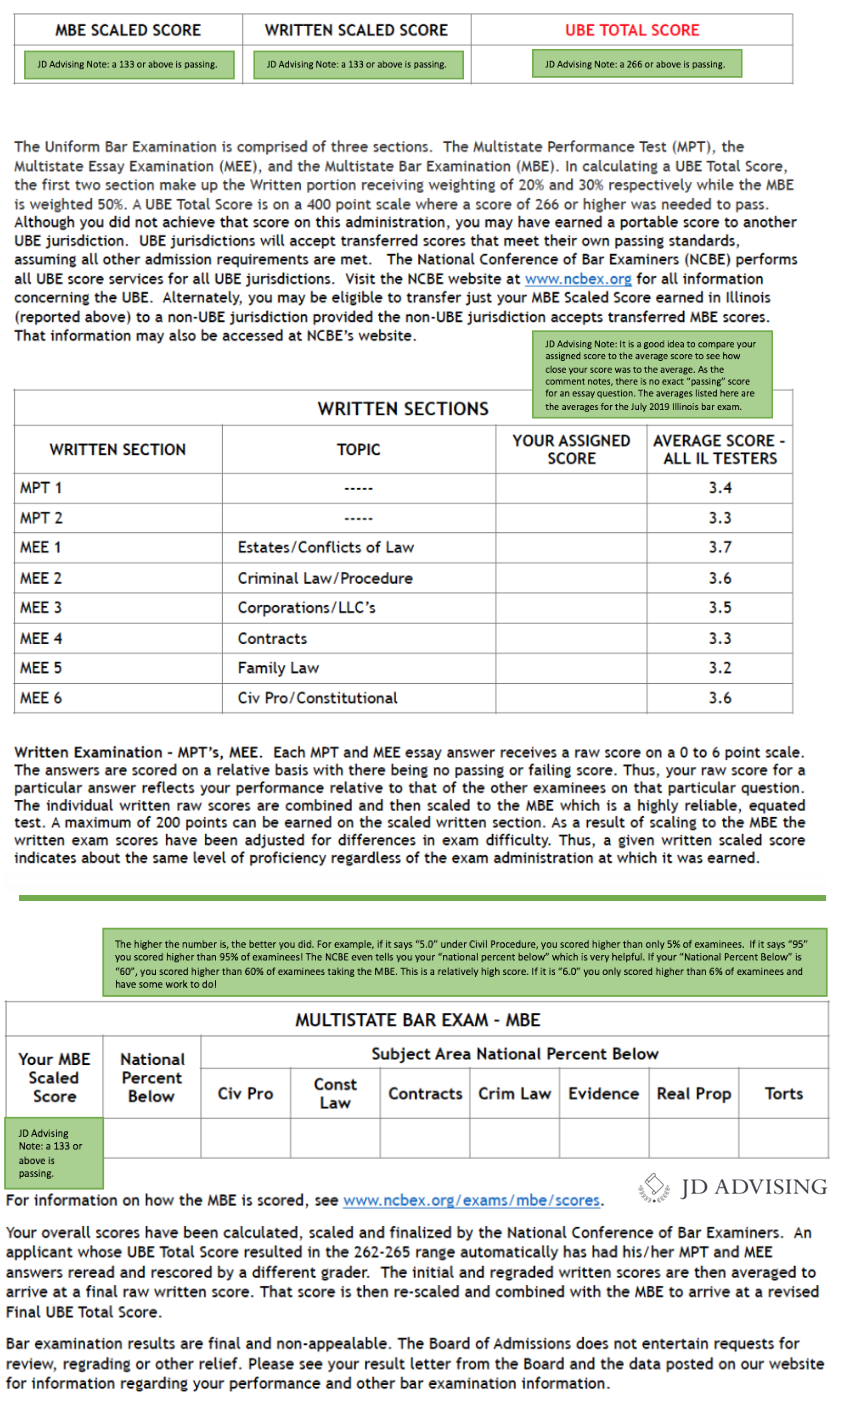 illinois bar exam score report